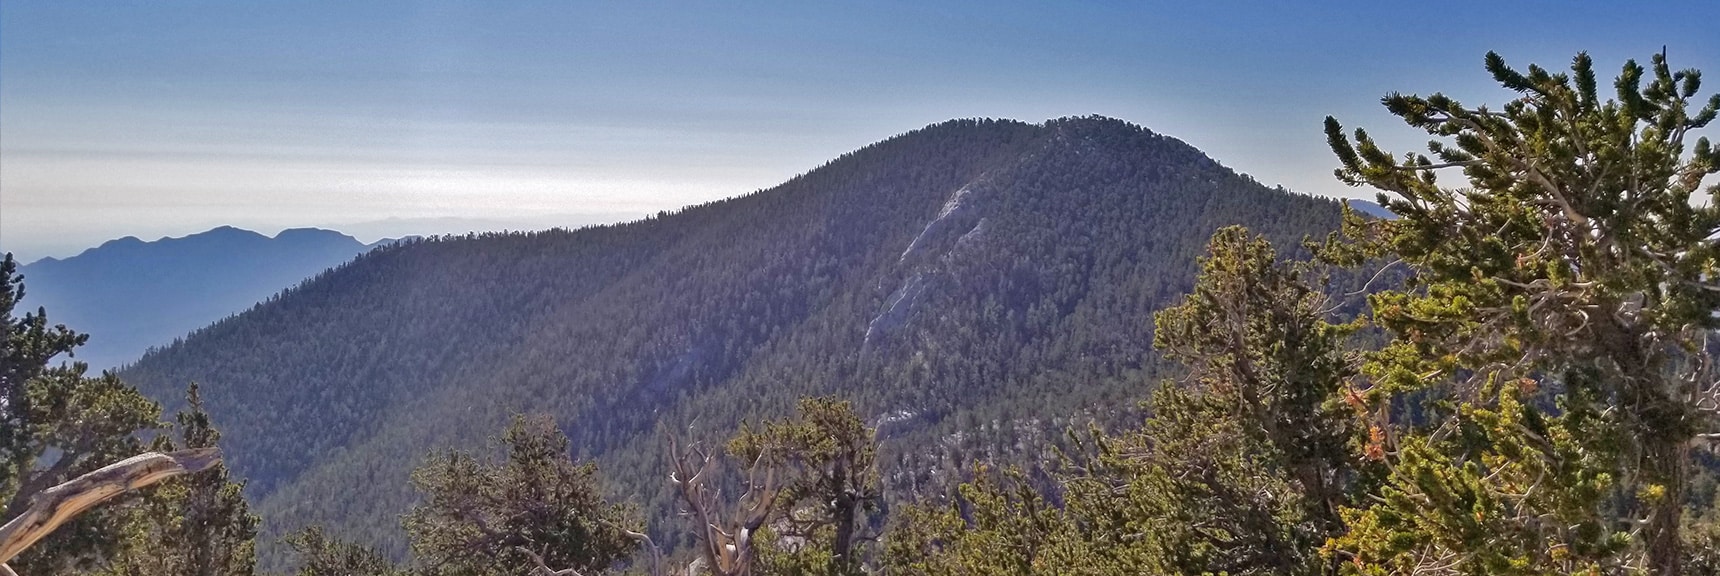 Fletcher Peak and La Madre Mountain Viewed from North Loop High Ridge | Mummy Springs Loop | Mt. Charleston Wilderness | Spring Mountains, Nevada